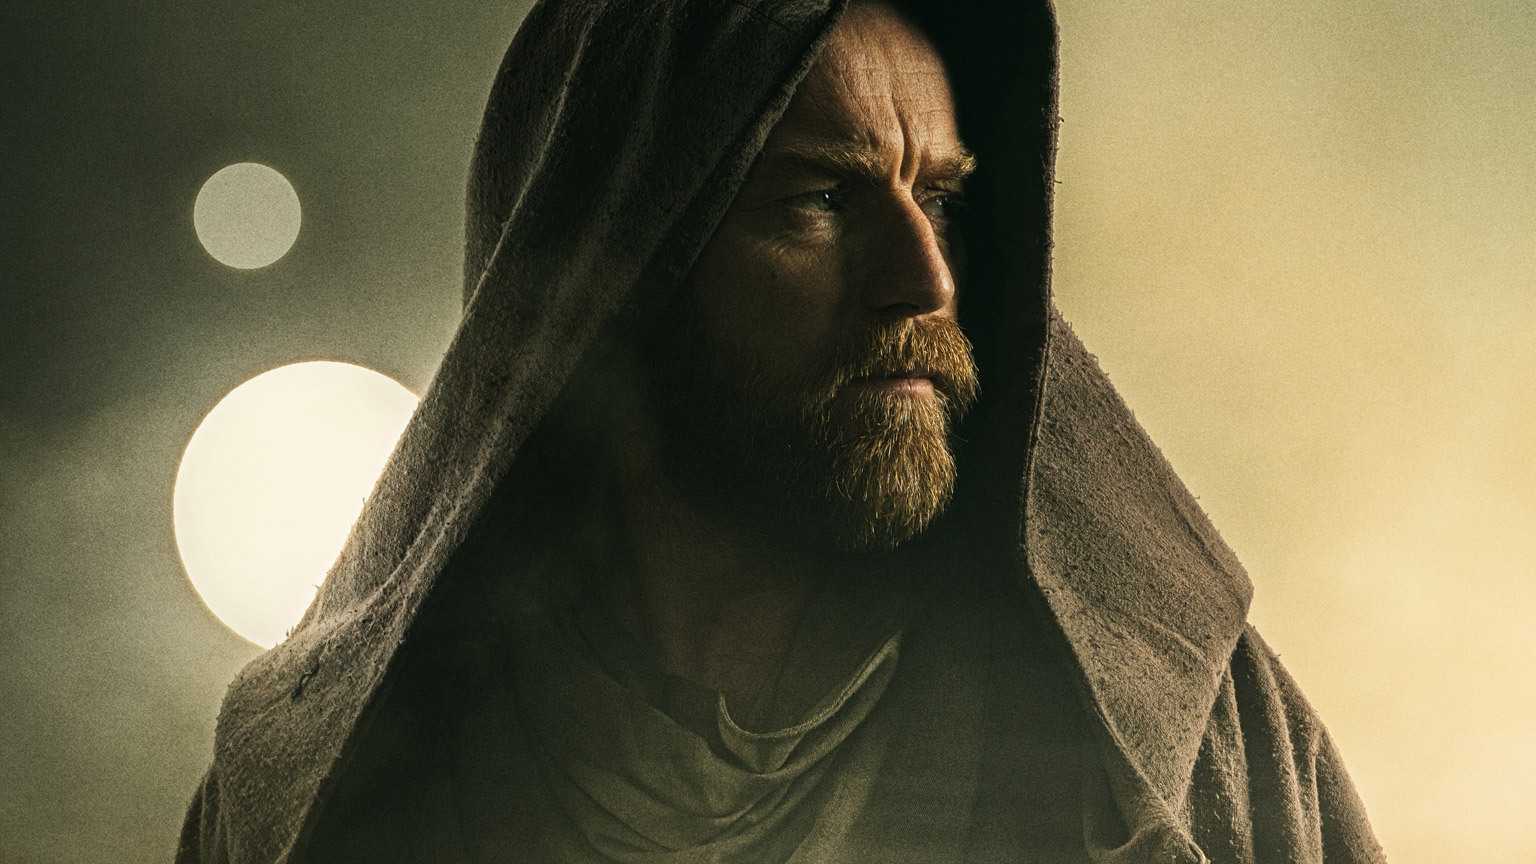 Obi-Wan Kenobi Episode 1&2 Review - Ewan McGregor’s return as the Jedi Master is off to a promising start